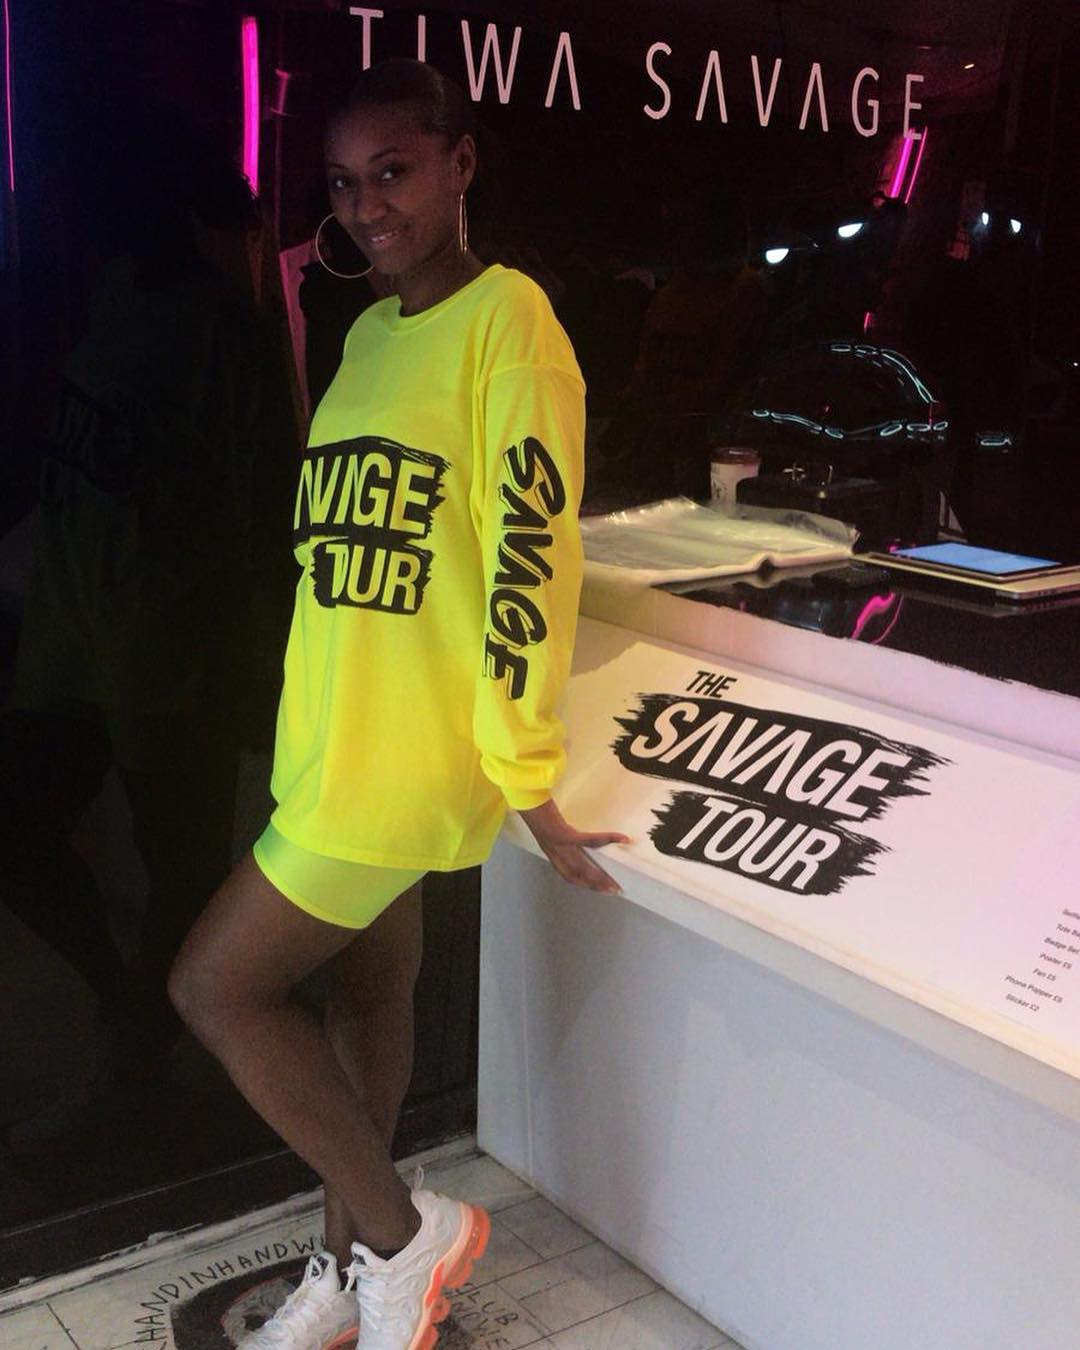 Tiwa Savage tour popup sale